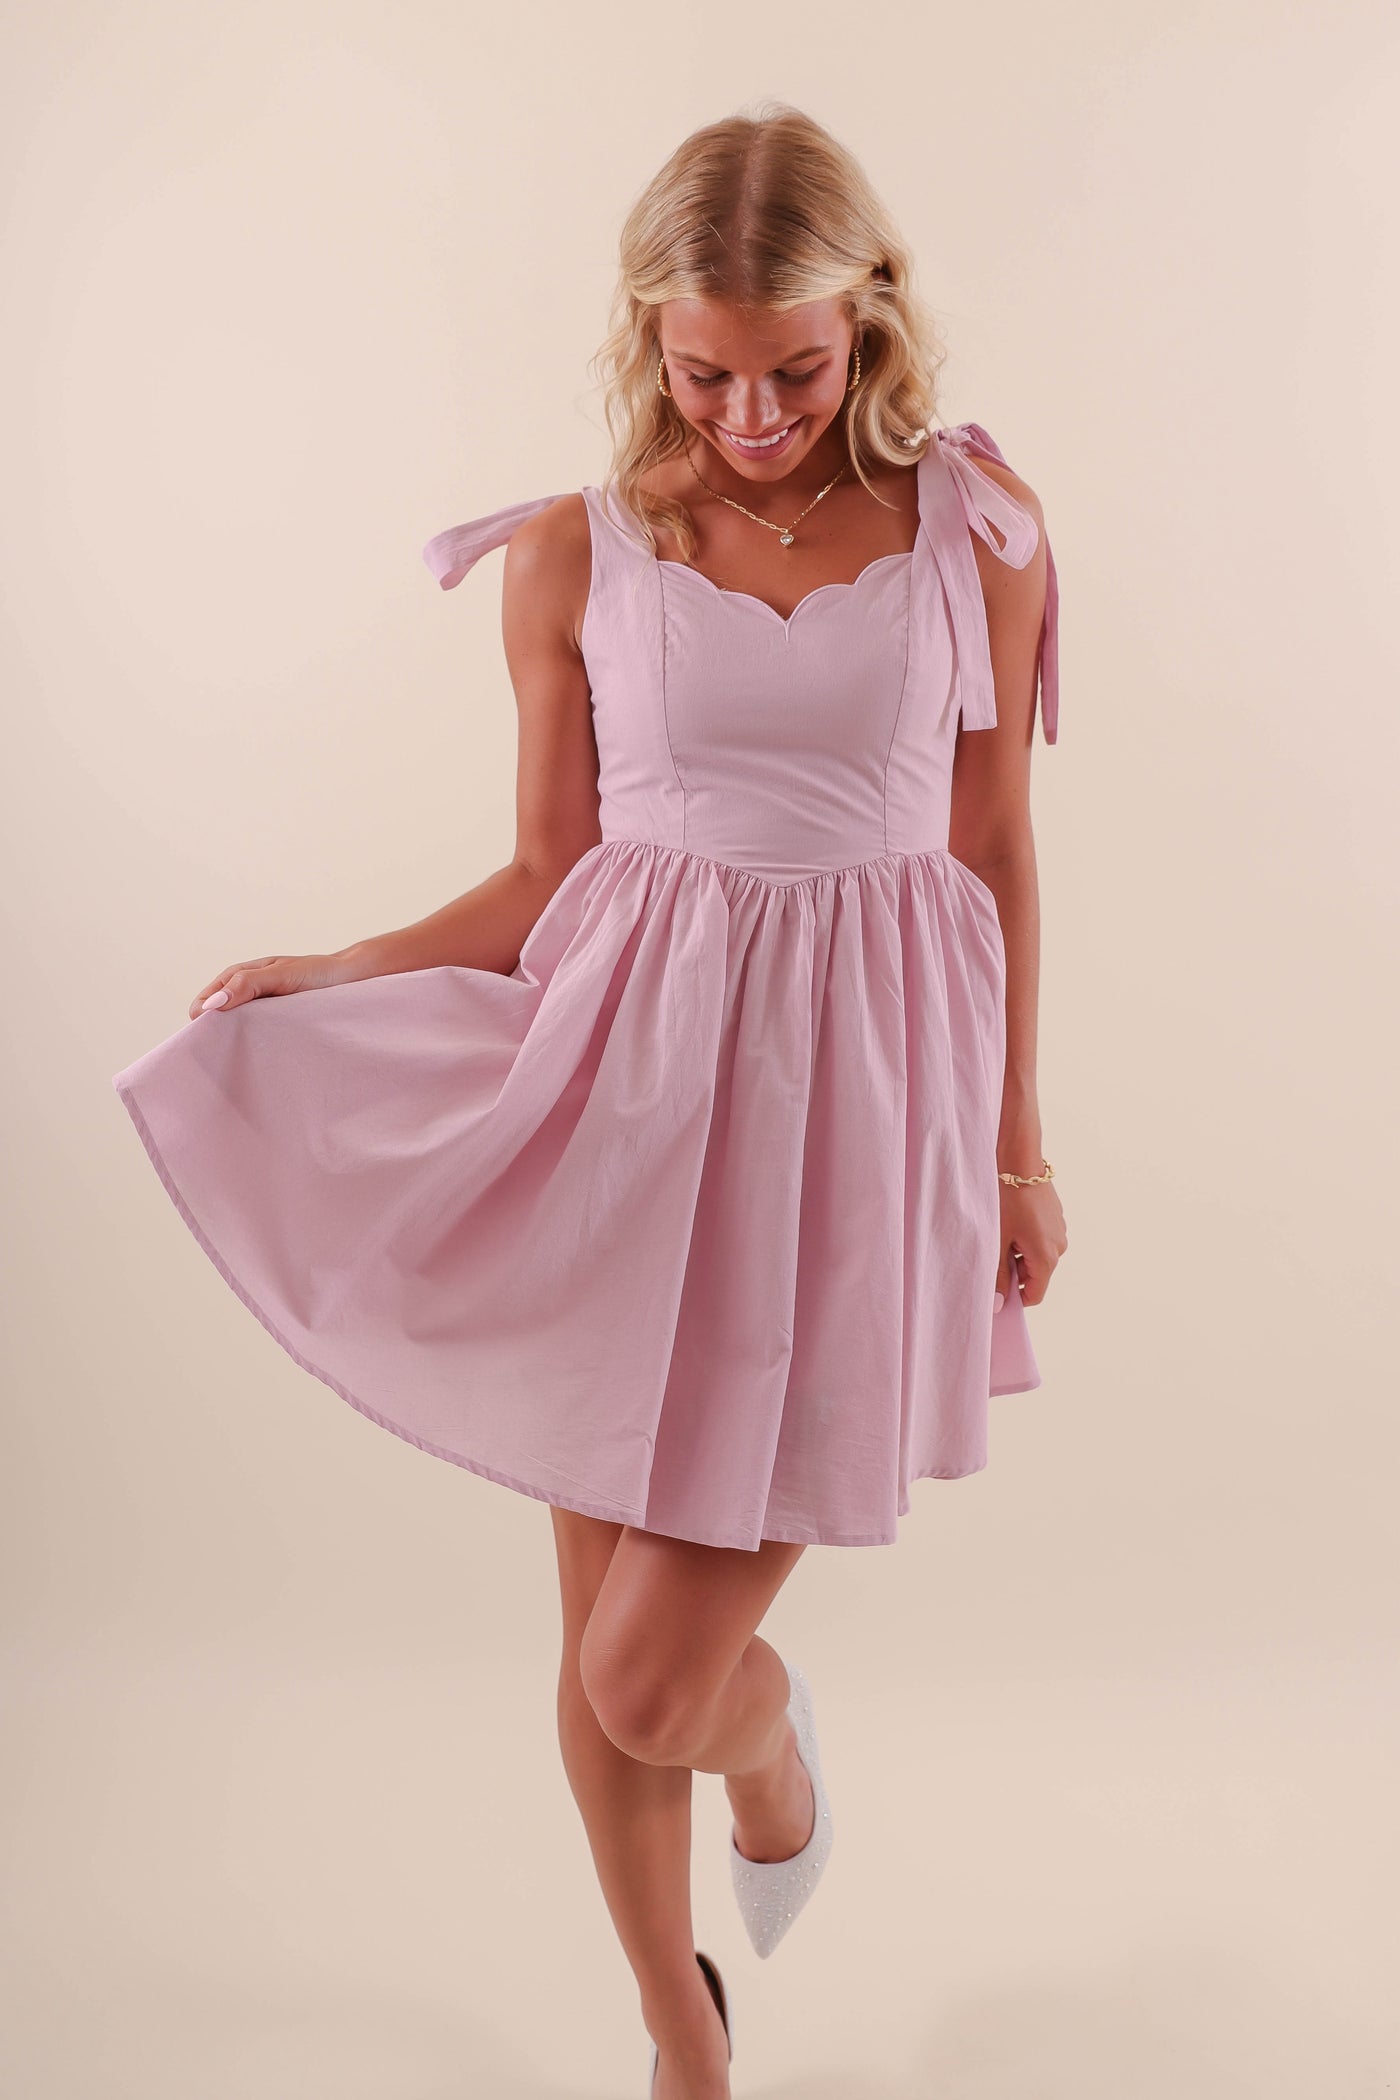 Women's Pink Scallop Mini Dress- Coquette Pink Mini Dress- Mable Scallop Dress